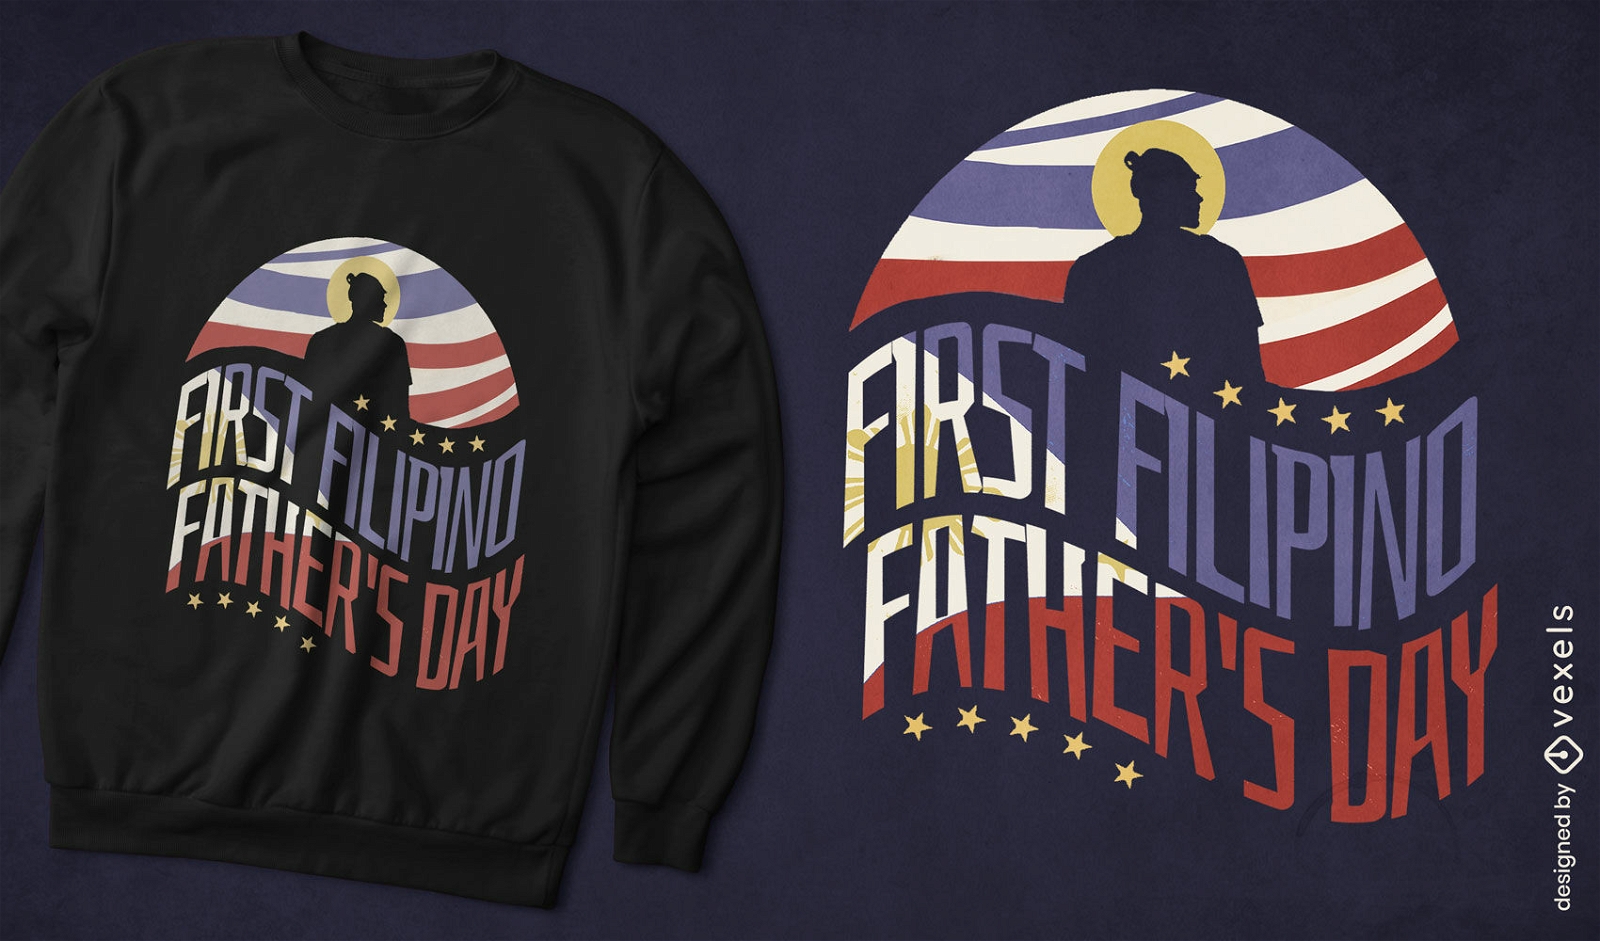 Filipino Father's Day t-shirt design